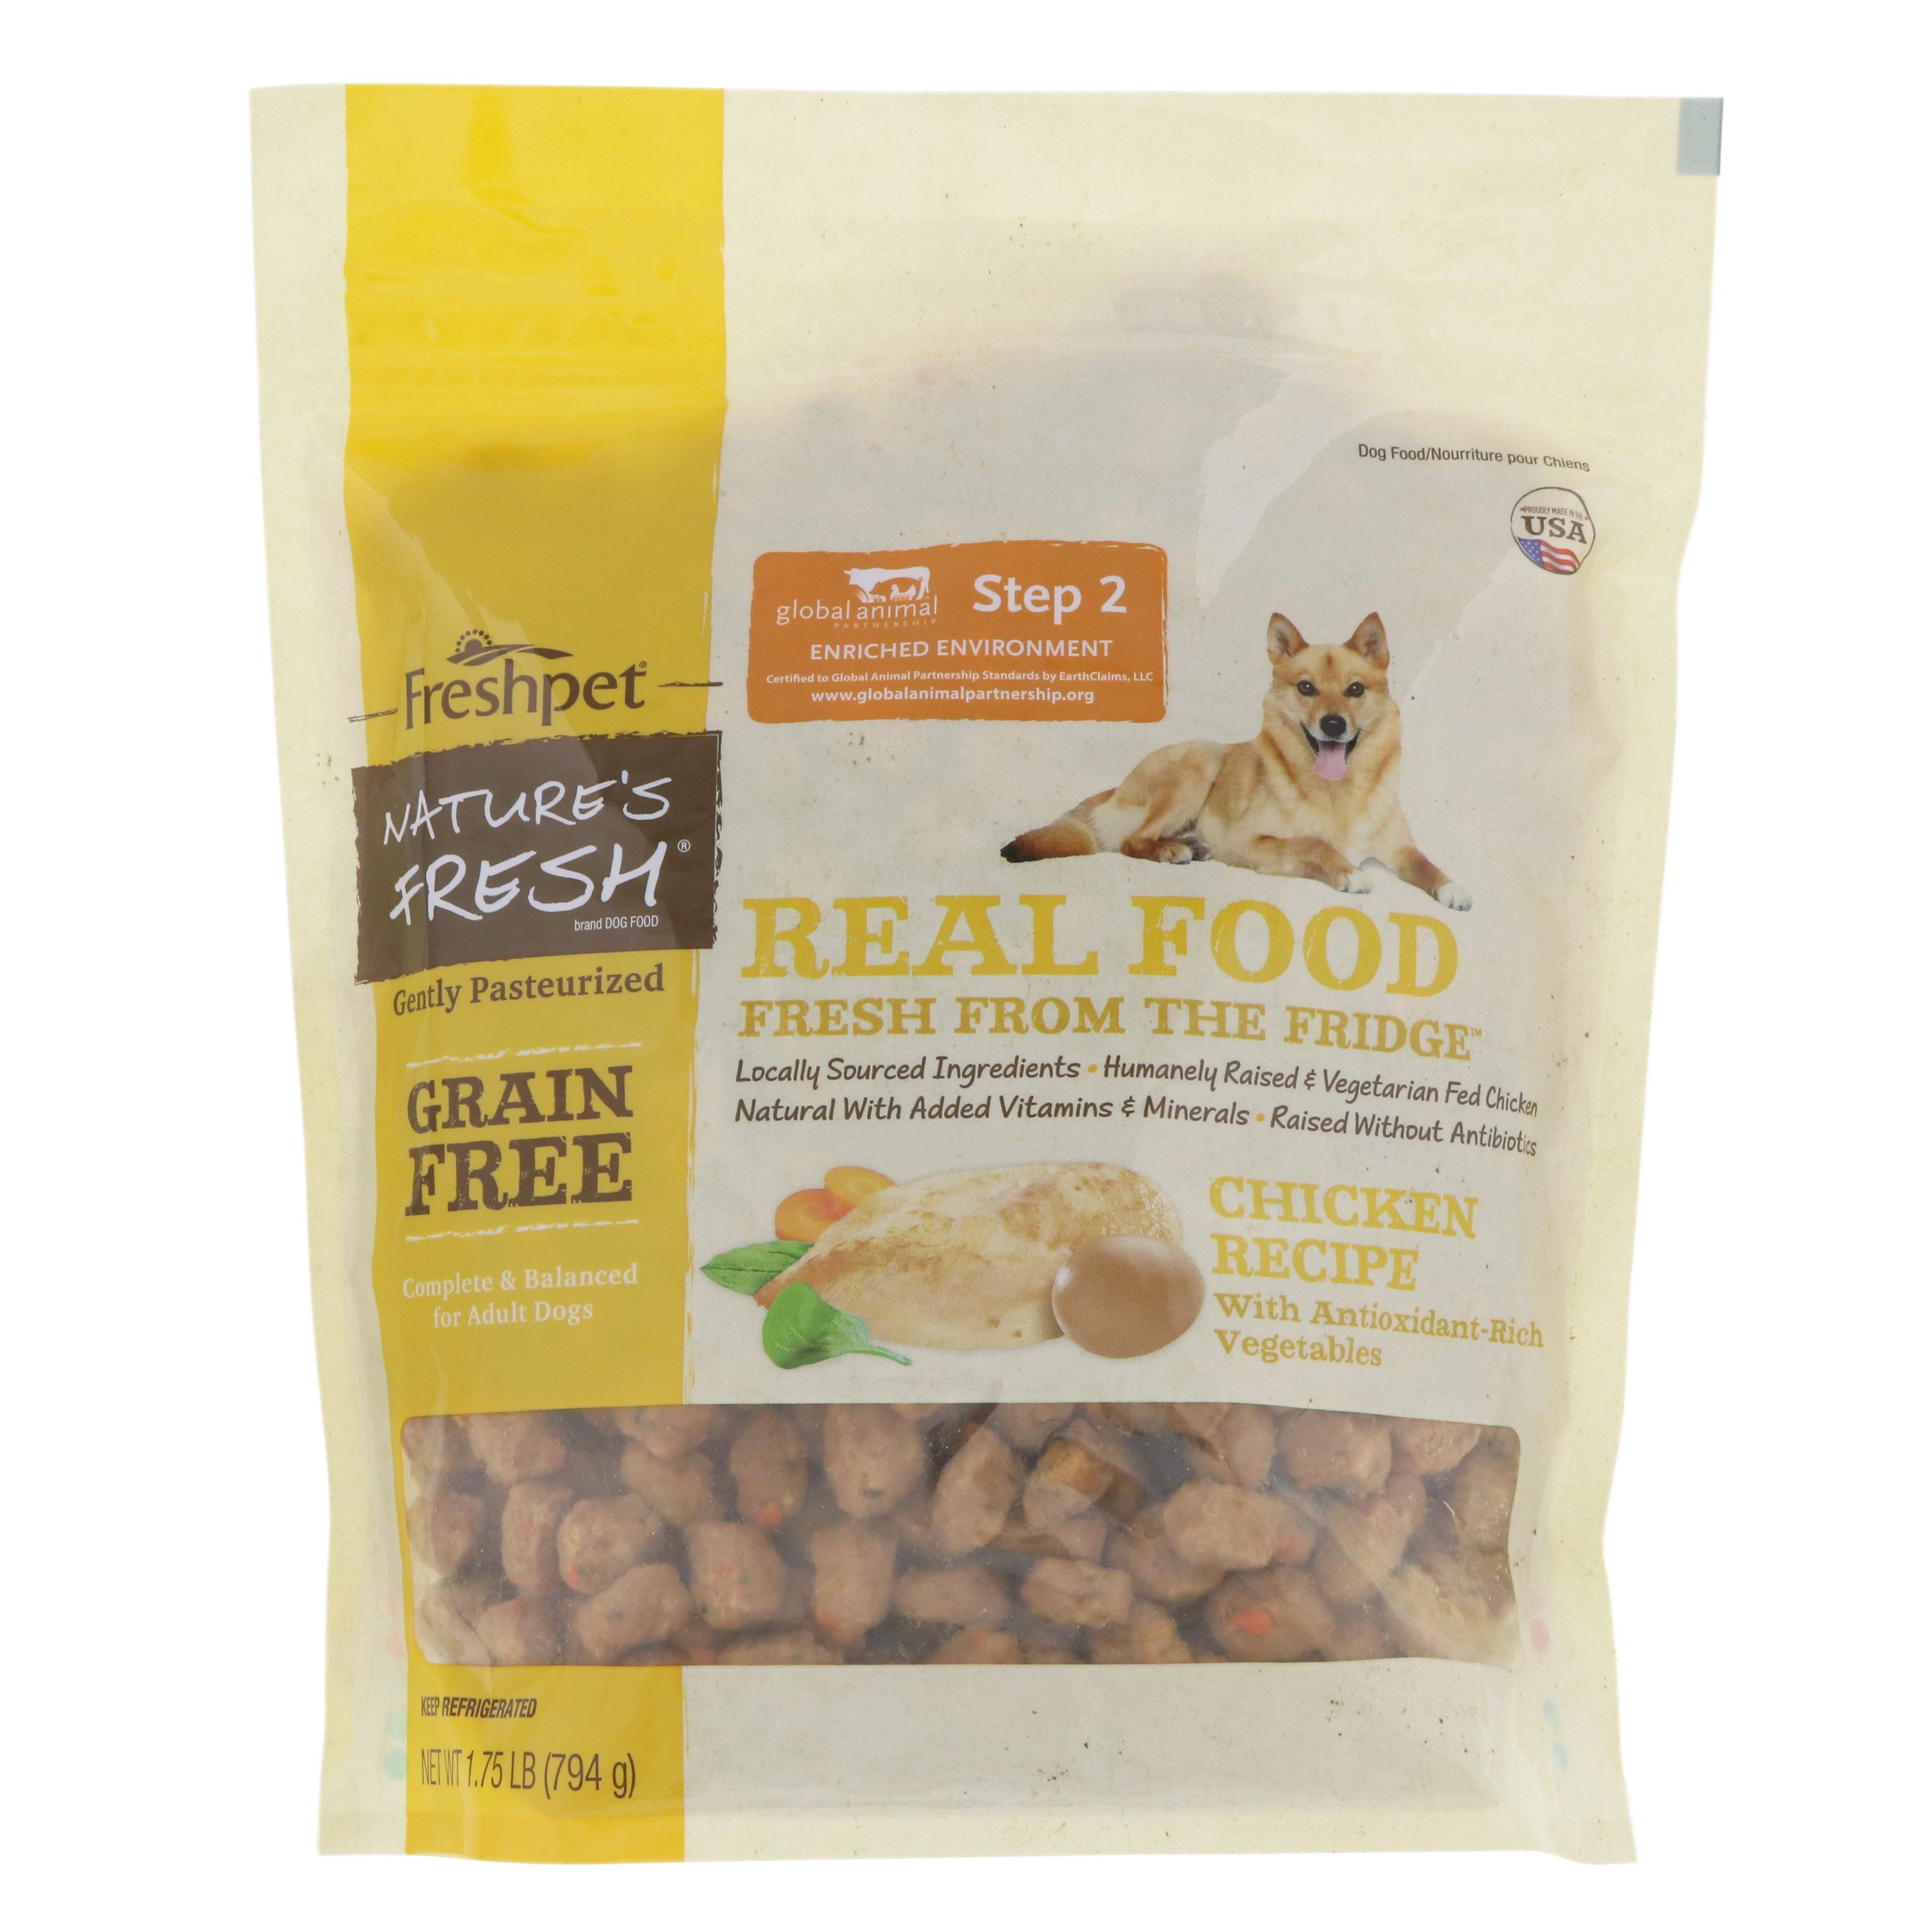 Freshpet Nature's Fresh Grain Free Chicken Adult Dog Food